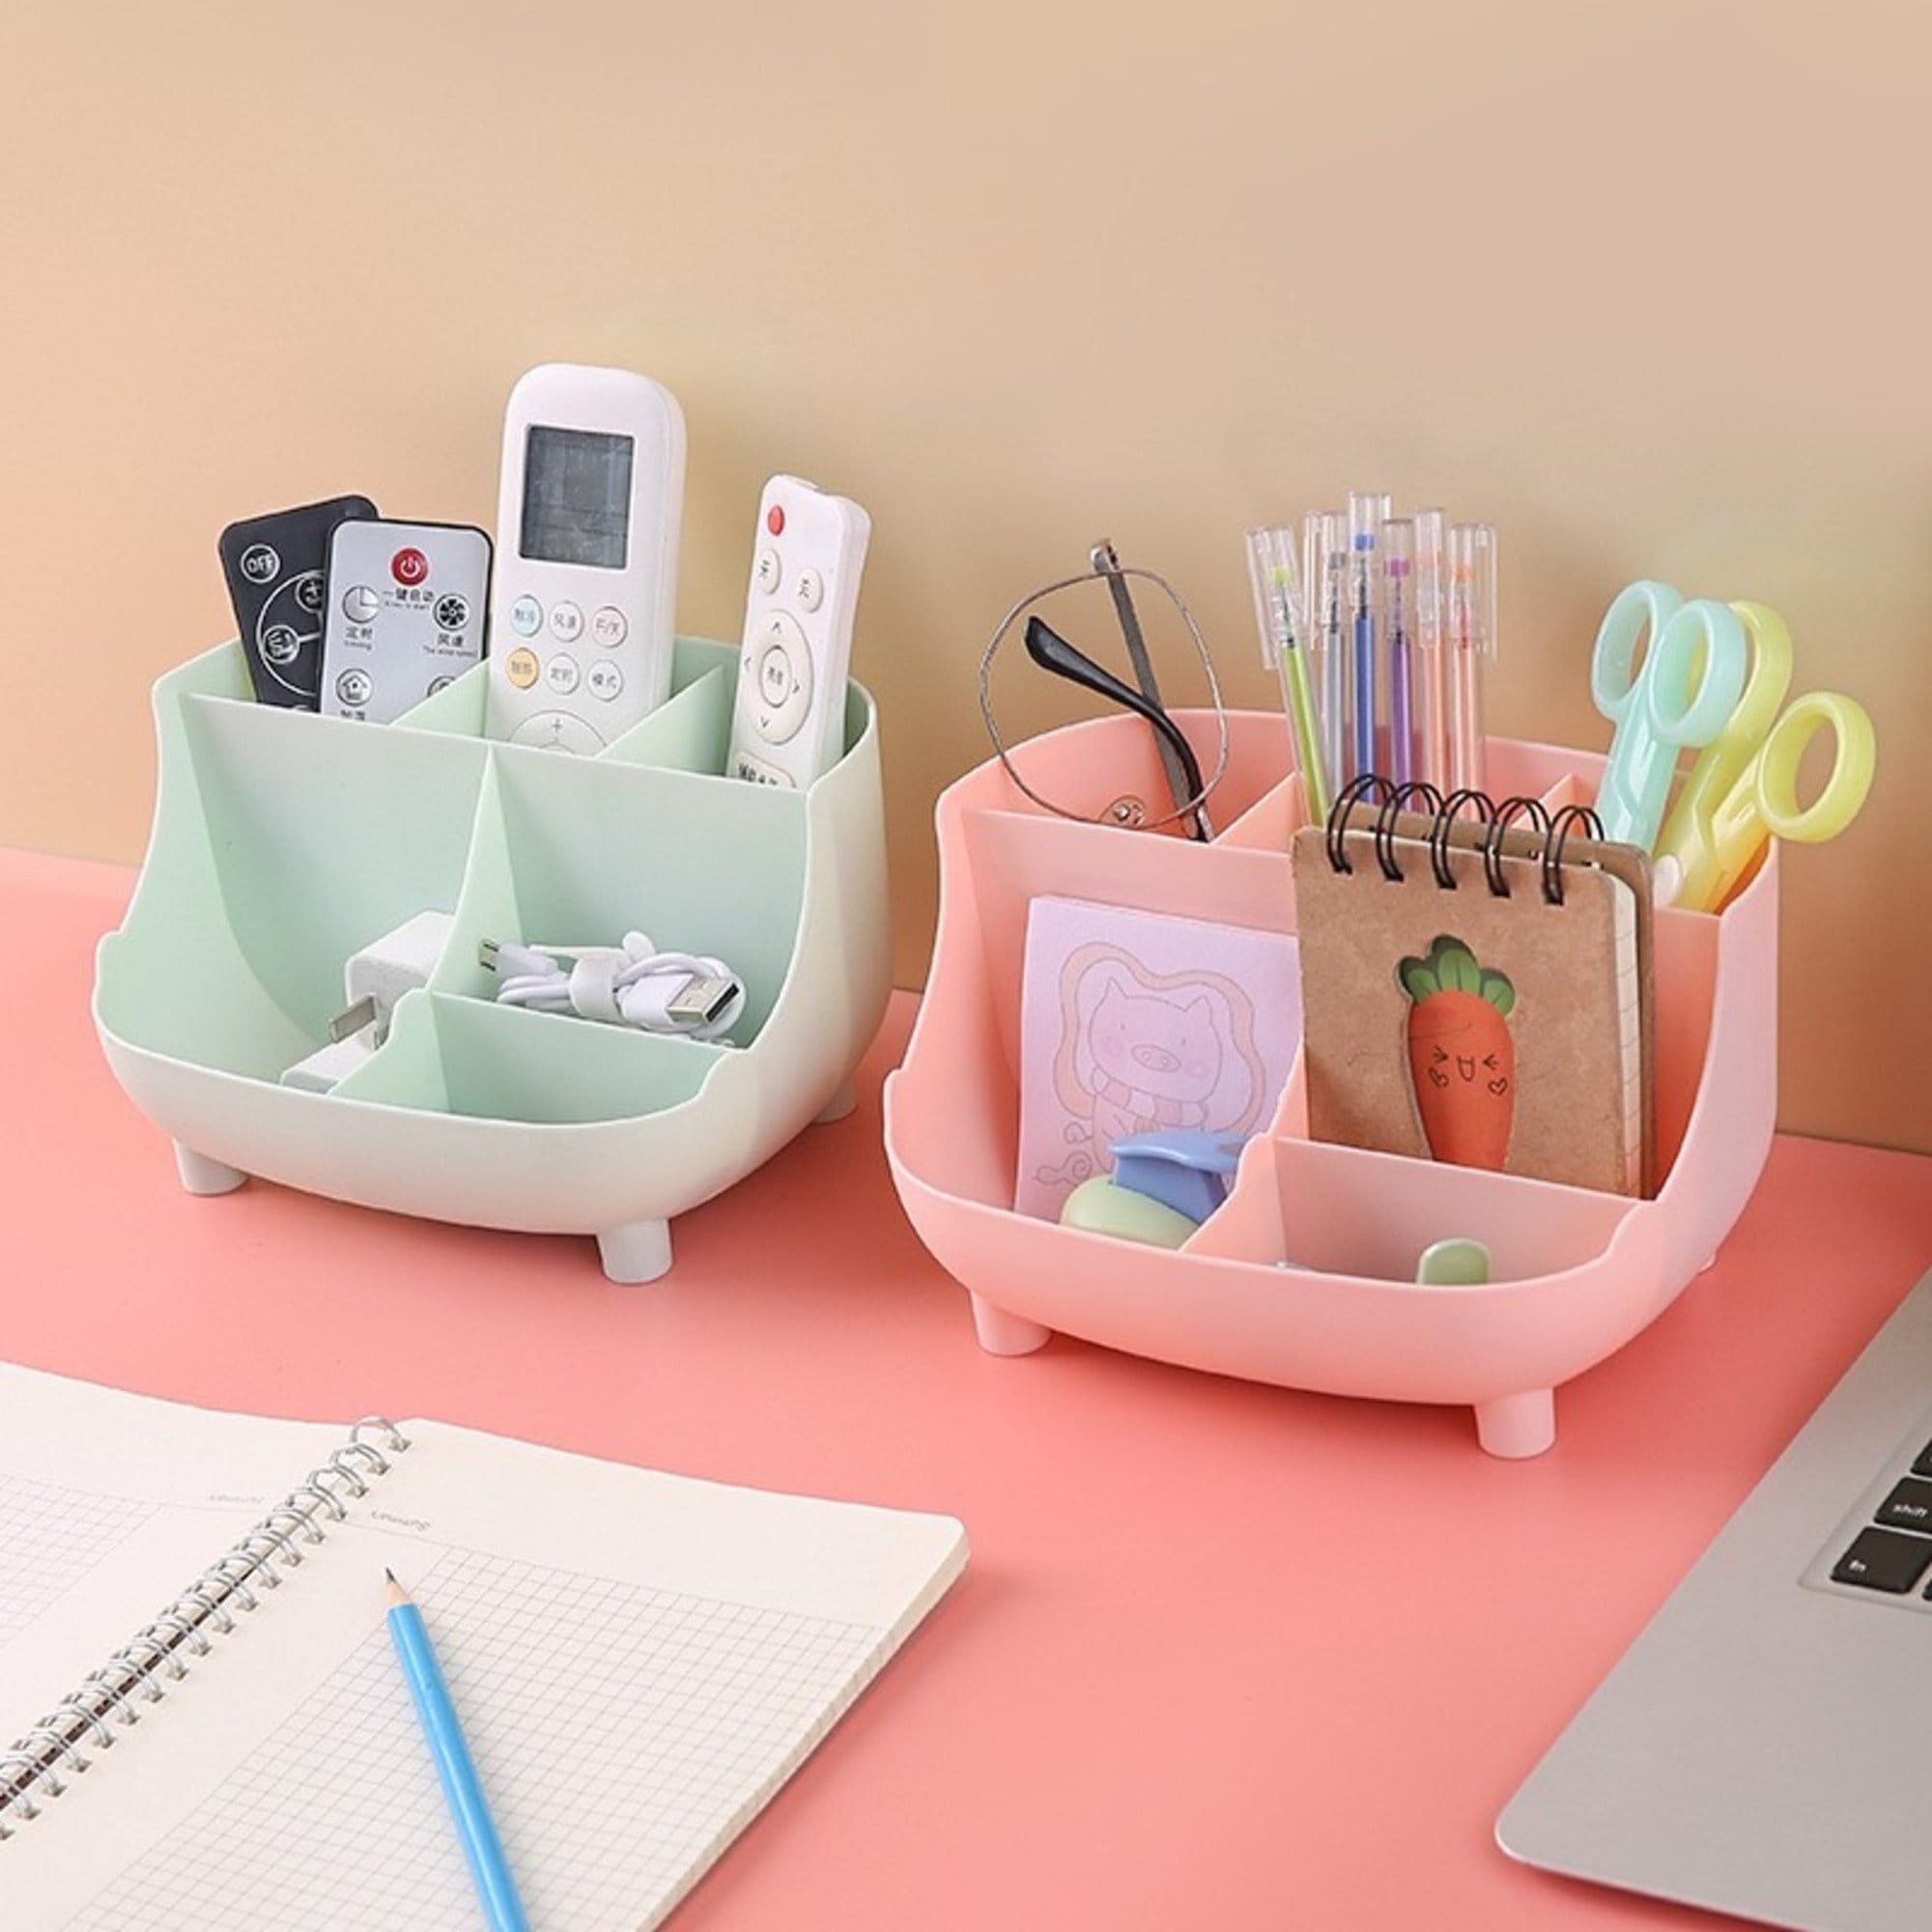 Cute Desk Organizer Set Rose Gold Accessories Pink Desktop Office